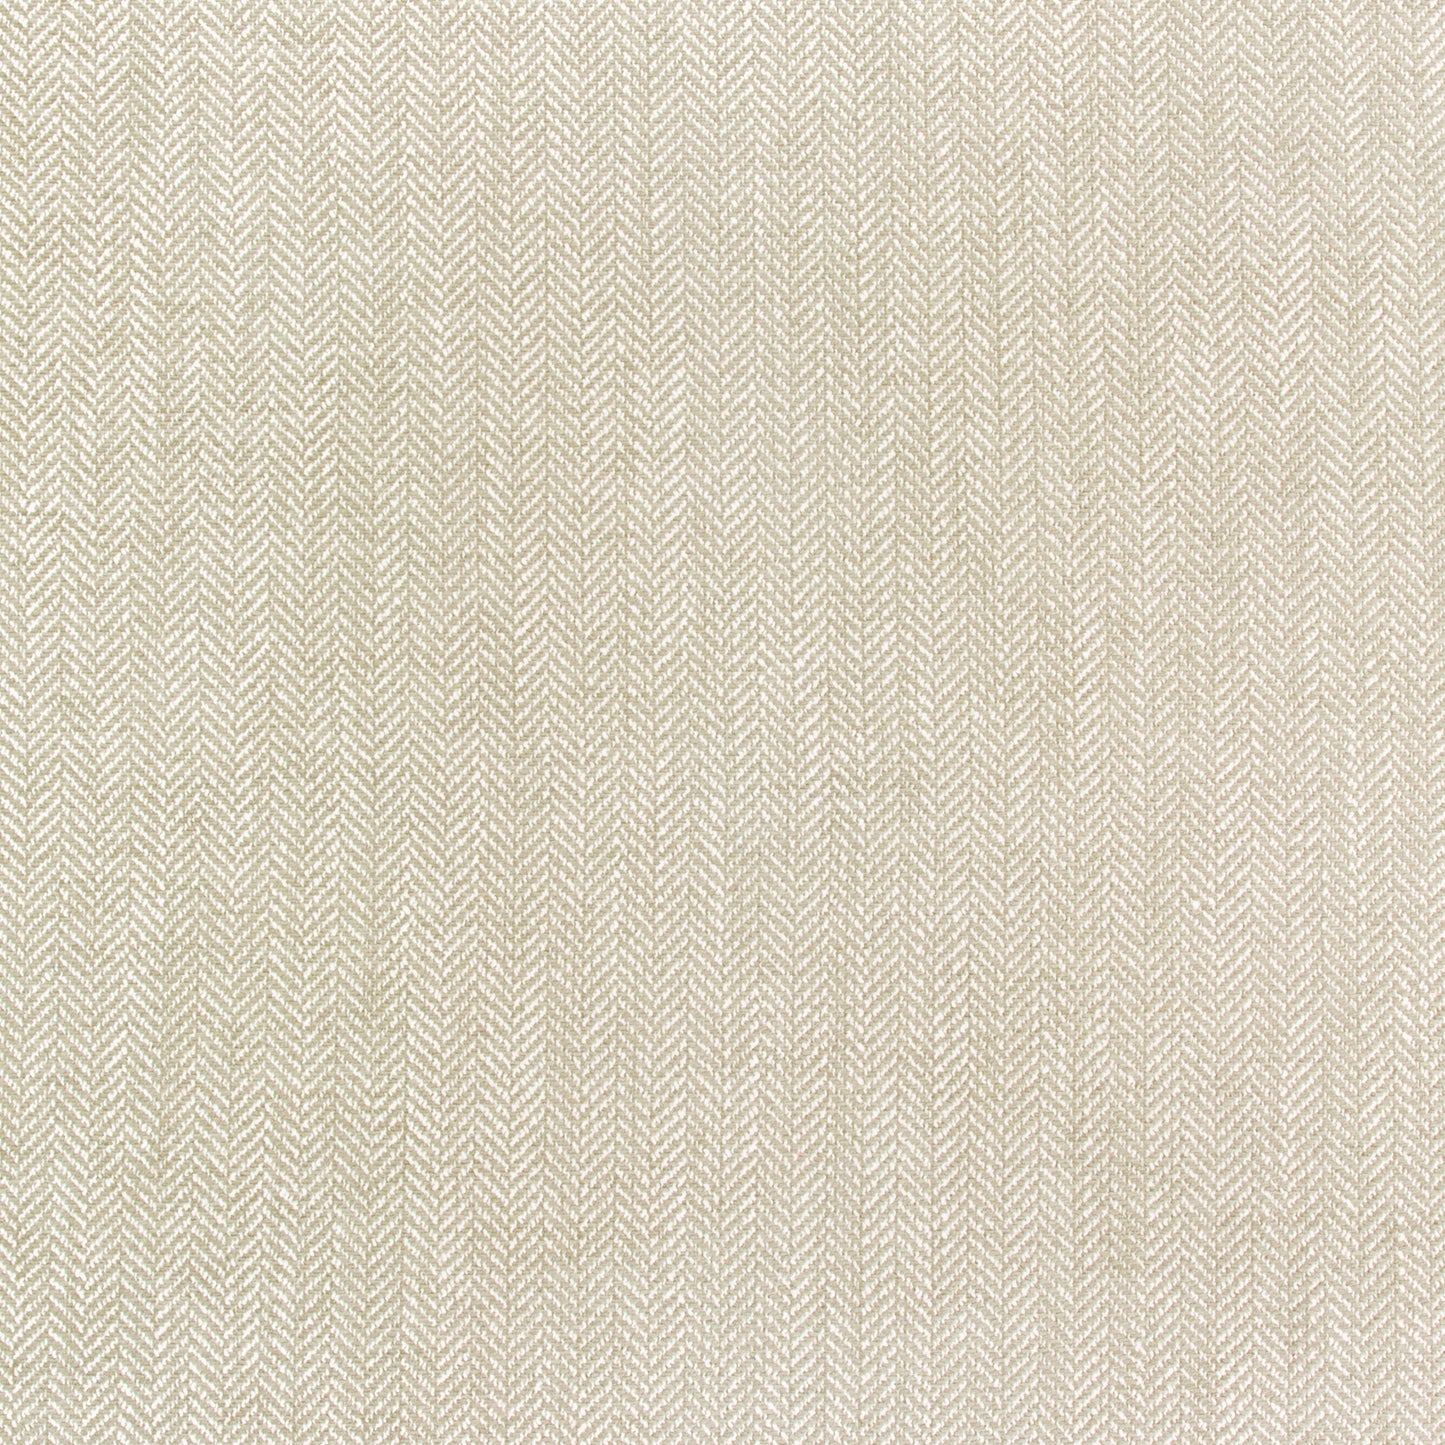 Purchase Thibaut Fabric Item W724135 pattern name Montebello Herr/Cfa Req'D color Flax